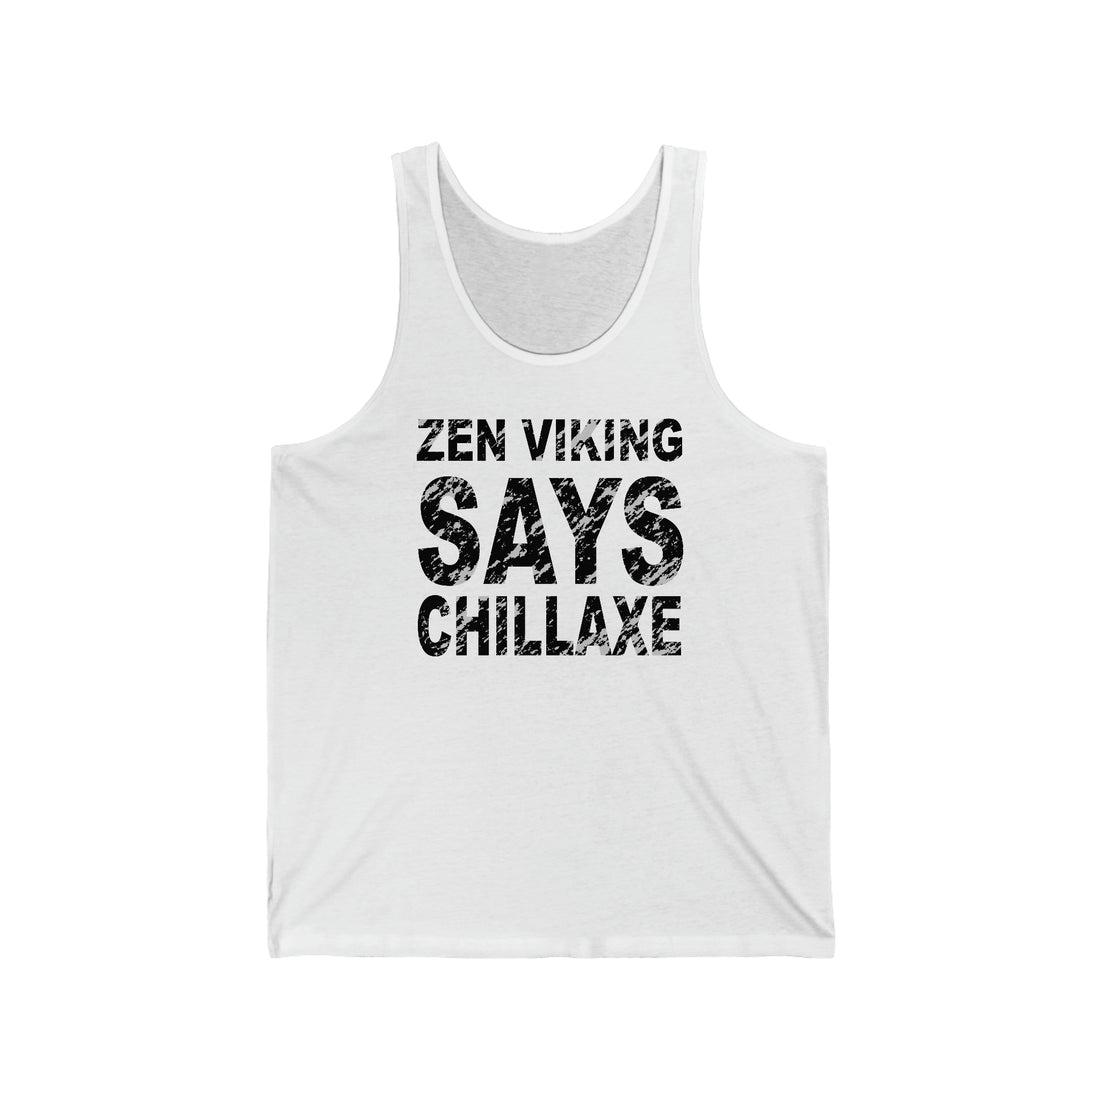 Chillaxe Tank Top - THE ZEN VIKING